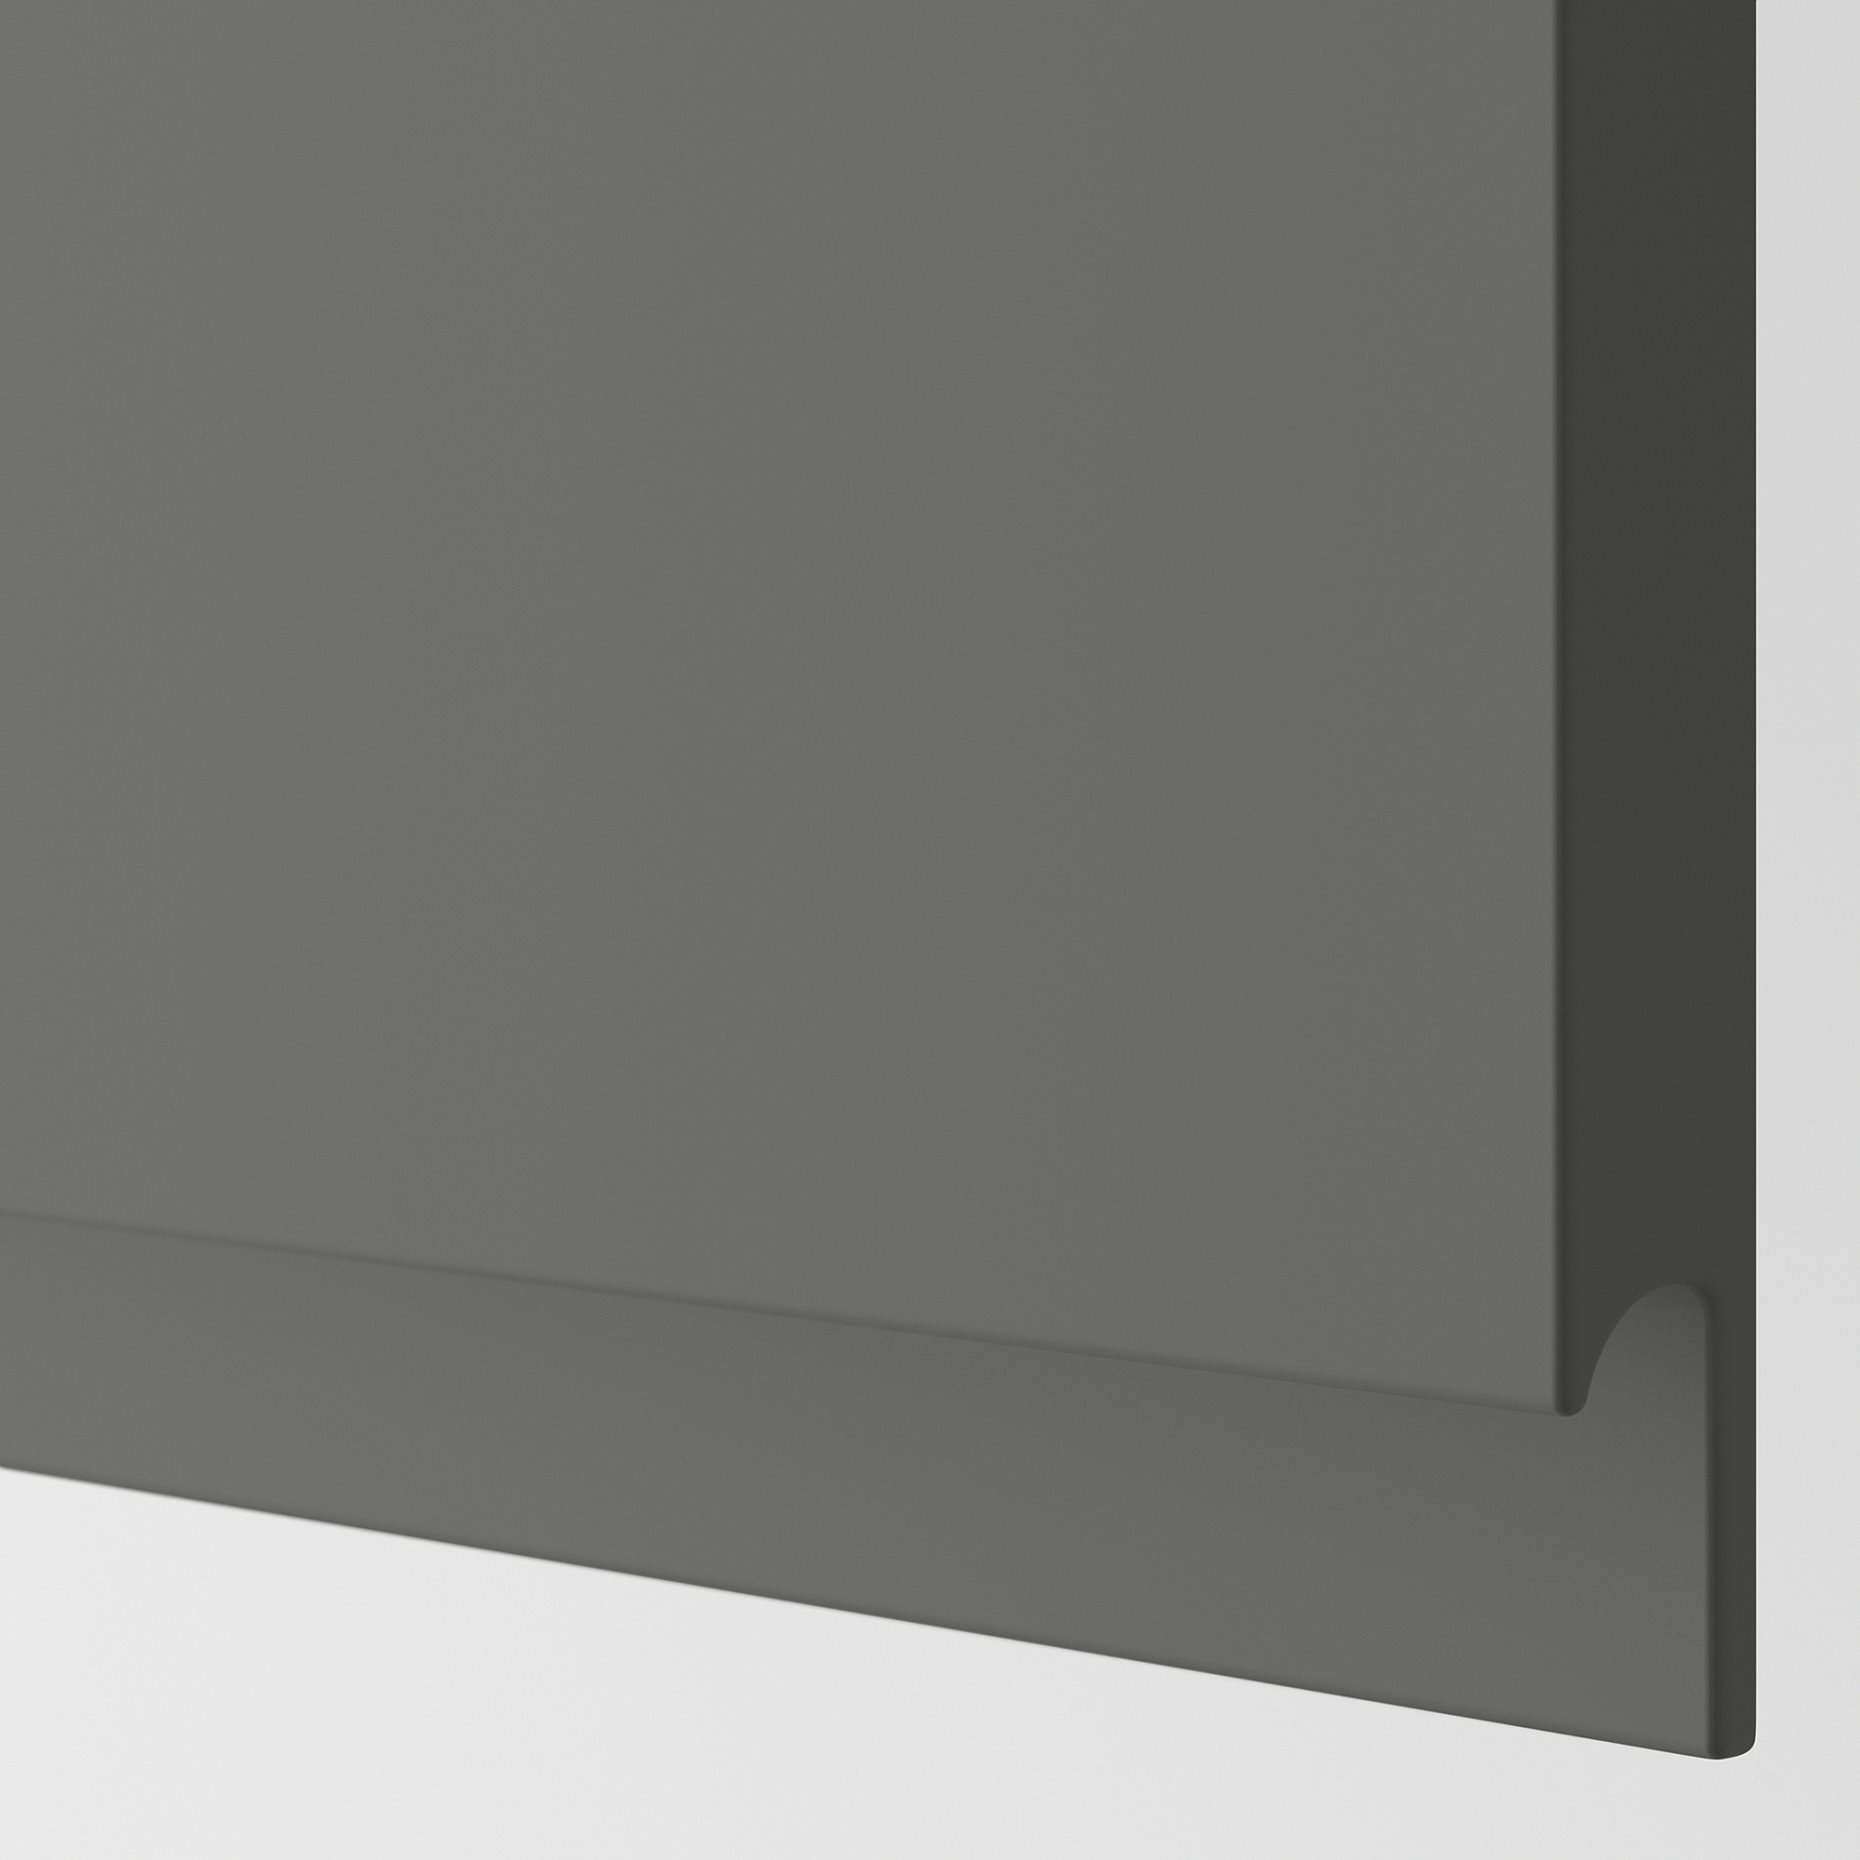 METOD, ντουλάπι βάσης για νεροχύτη/2 πόρτες, 80x60 cm, 394.601.85